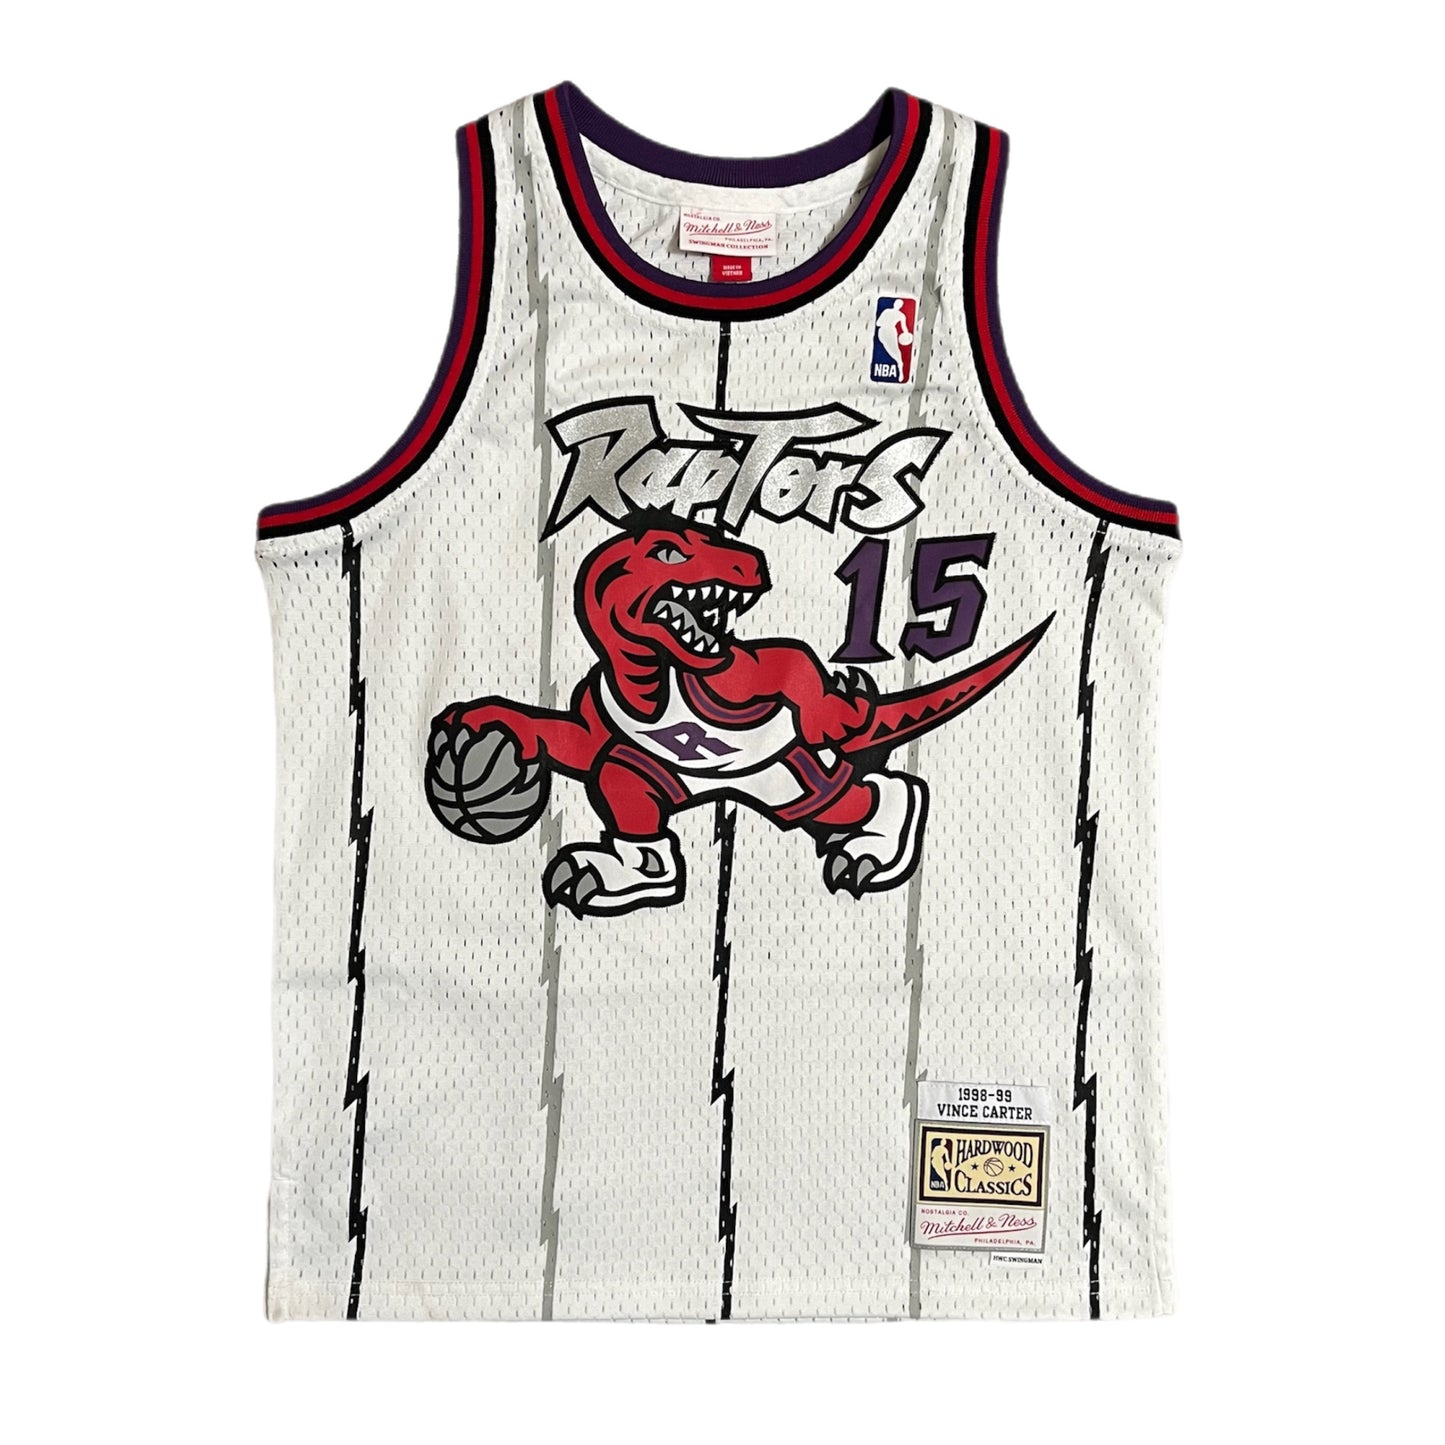 1998-99 Vince Carter Toronto Raptors Hardwood Classic Jersey - YM